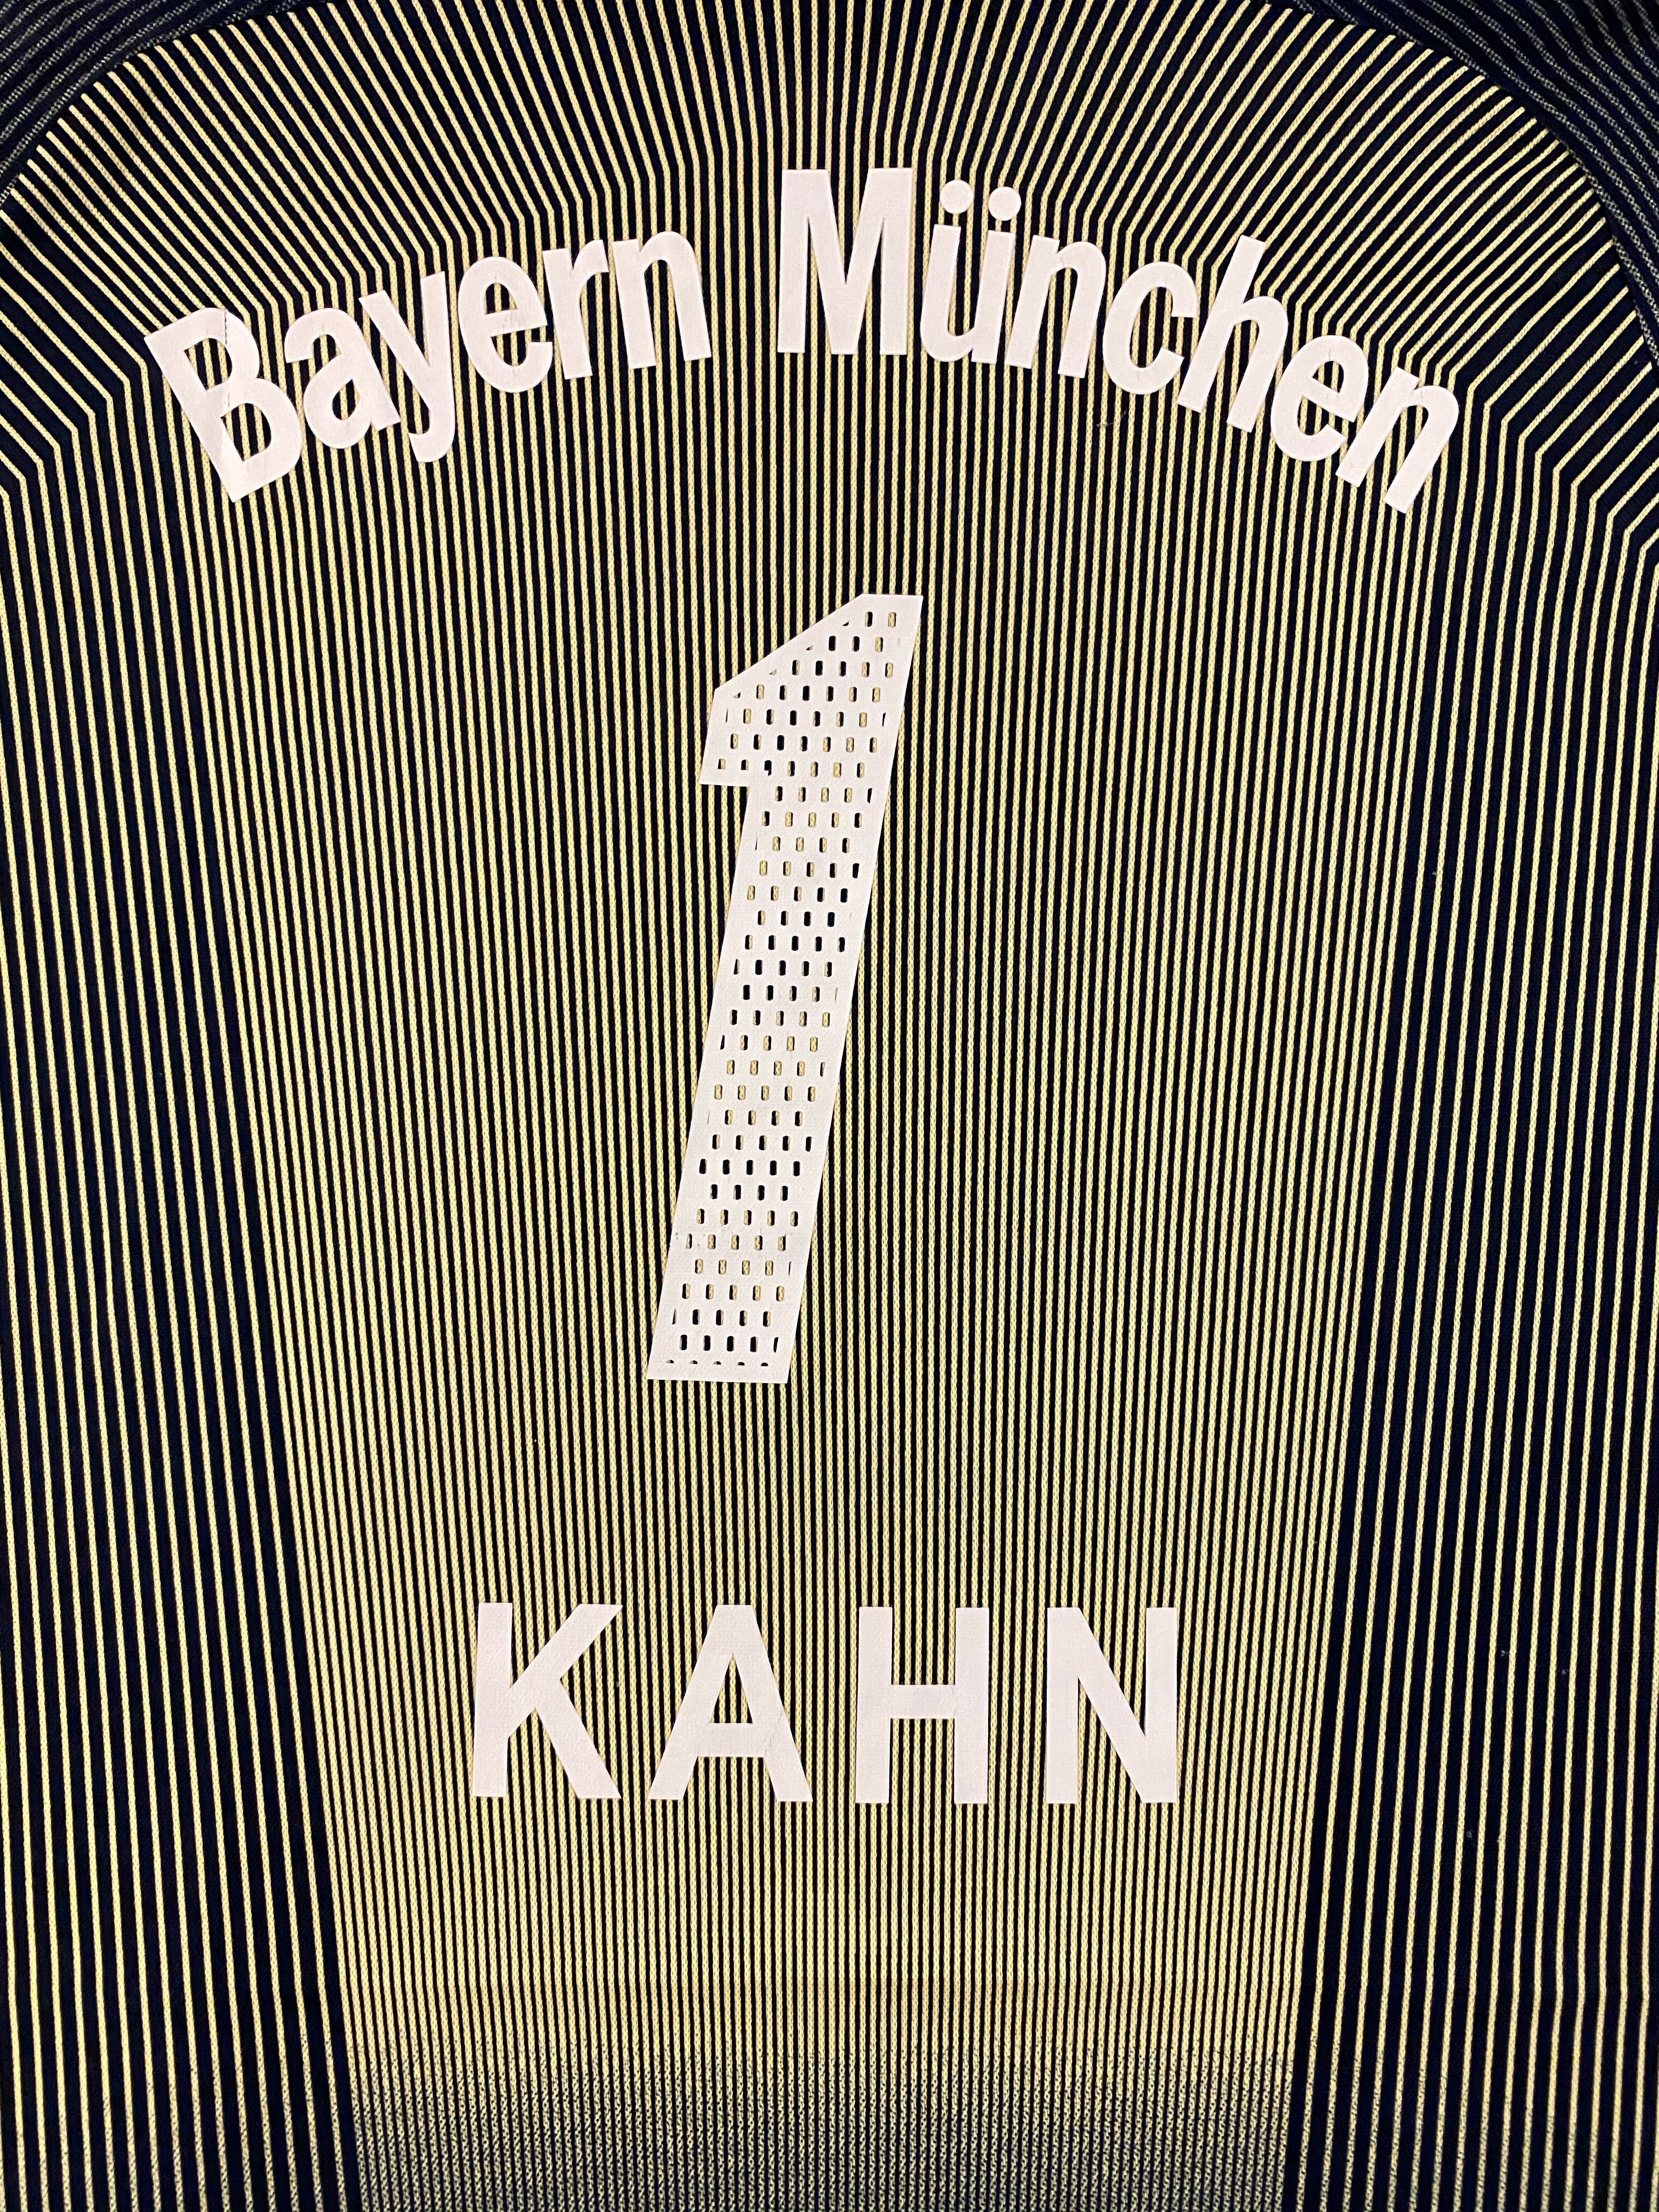 2003/04 Camiseta del Bayern Munich GK Kahn #1 (S) 9/10